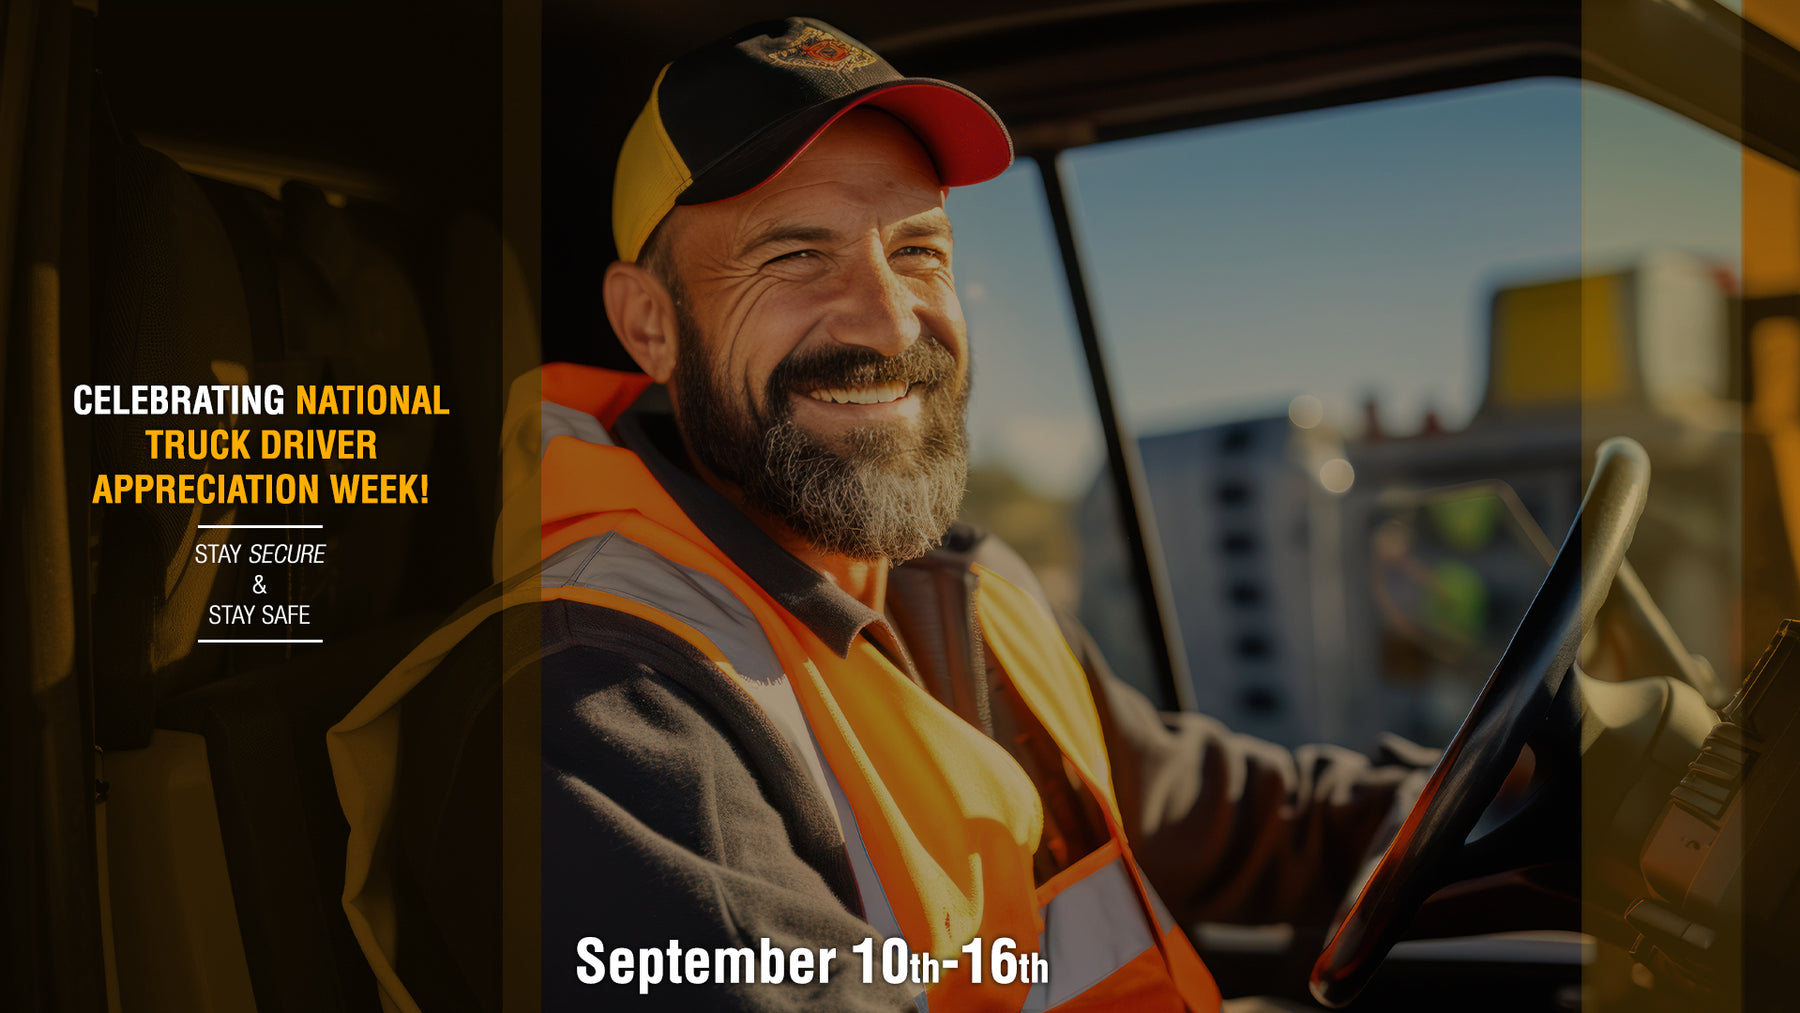 Celebrating National Truck Driver Appreciation Week